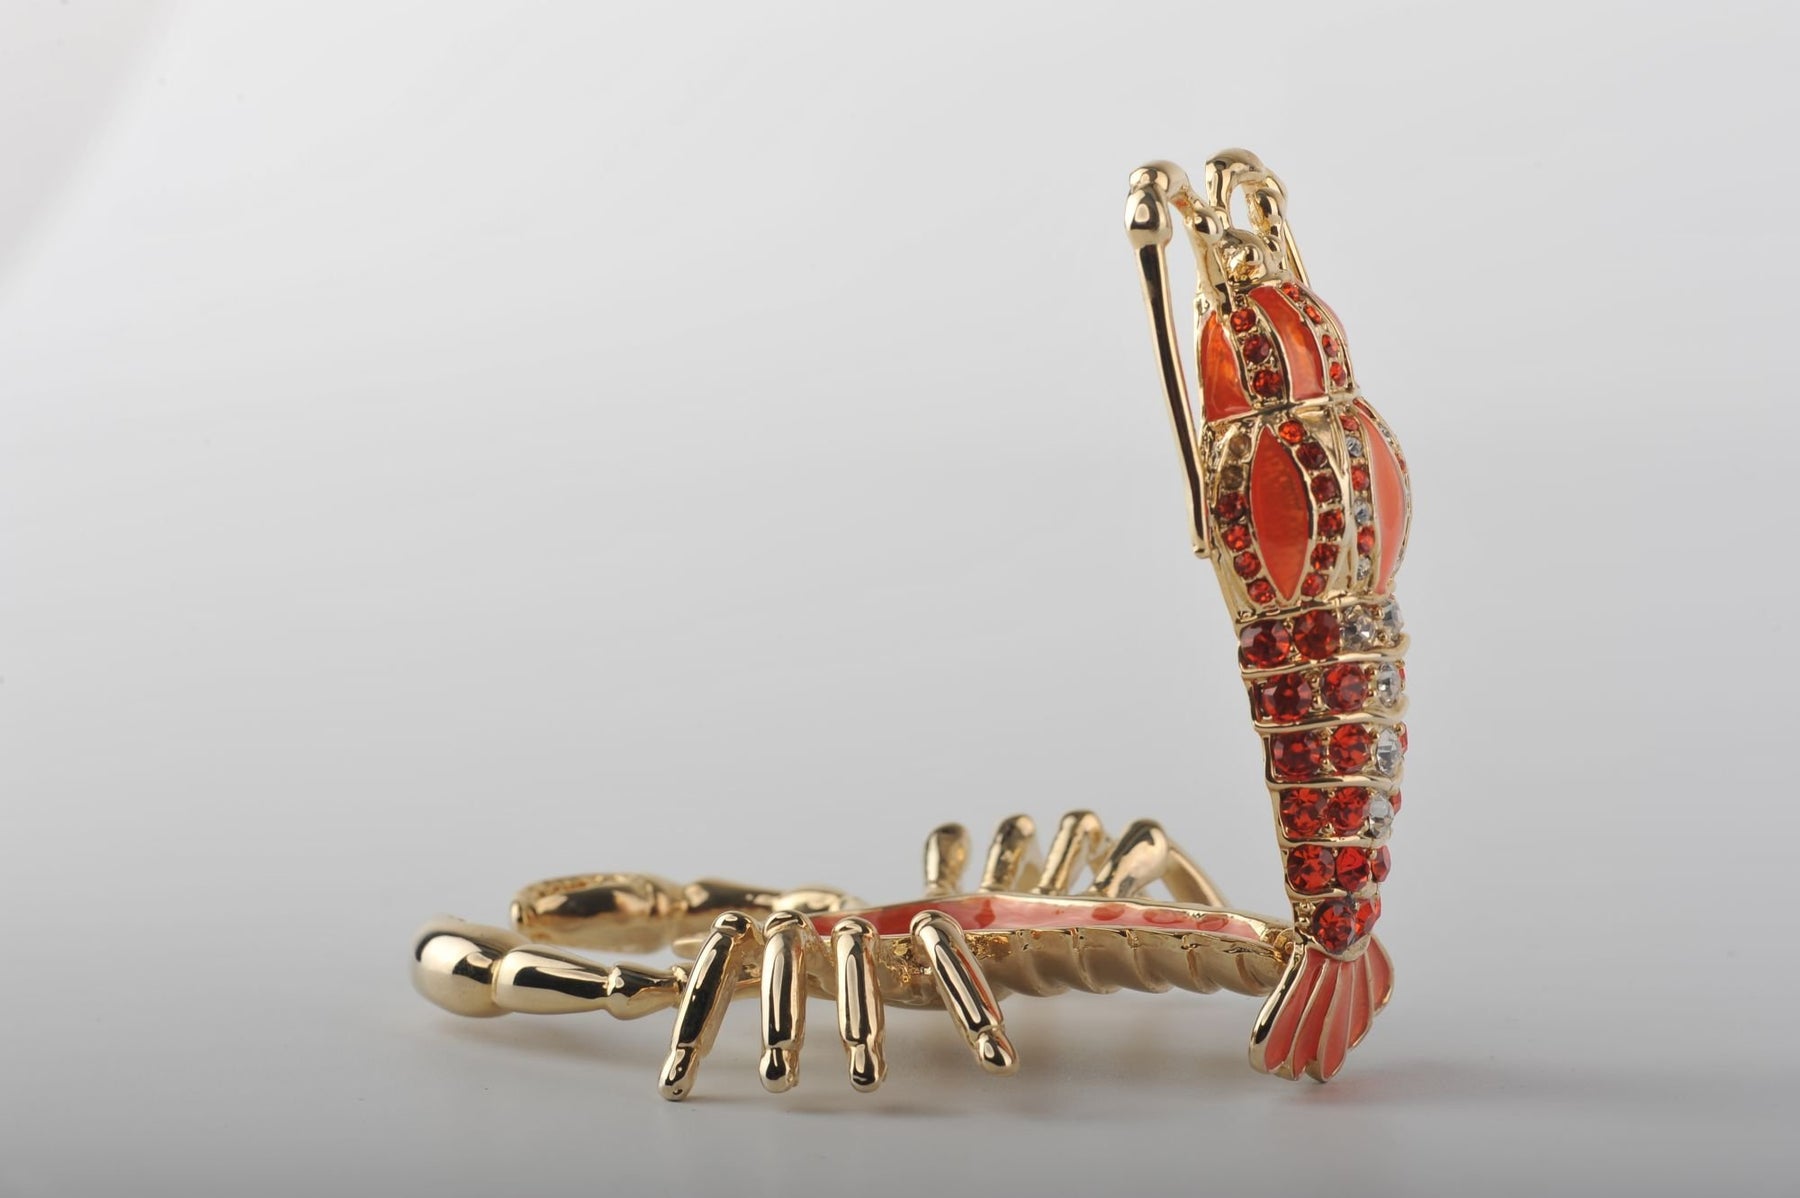 Lobster  Keren Kopal